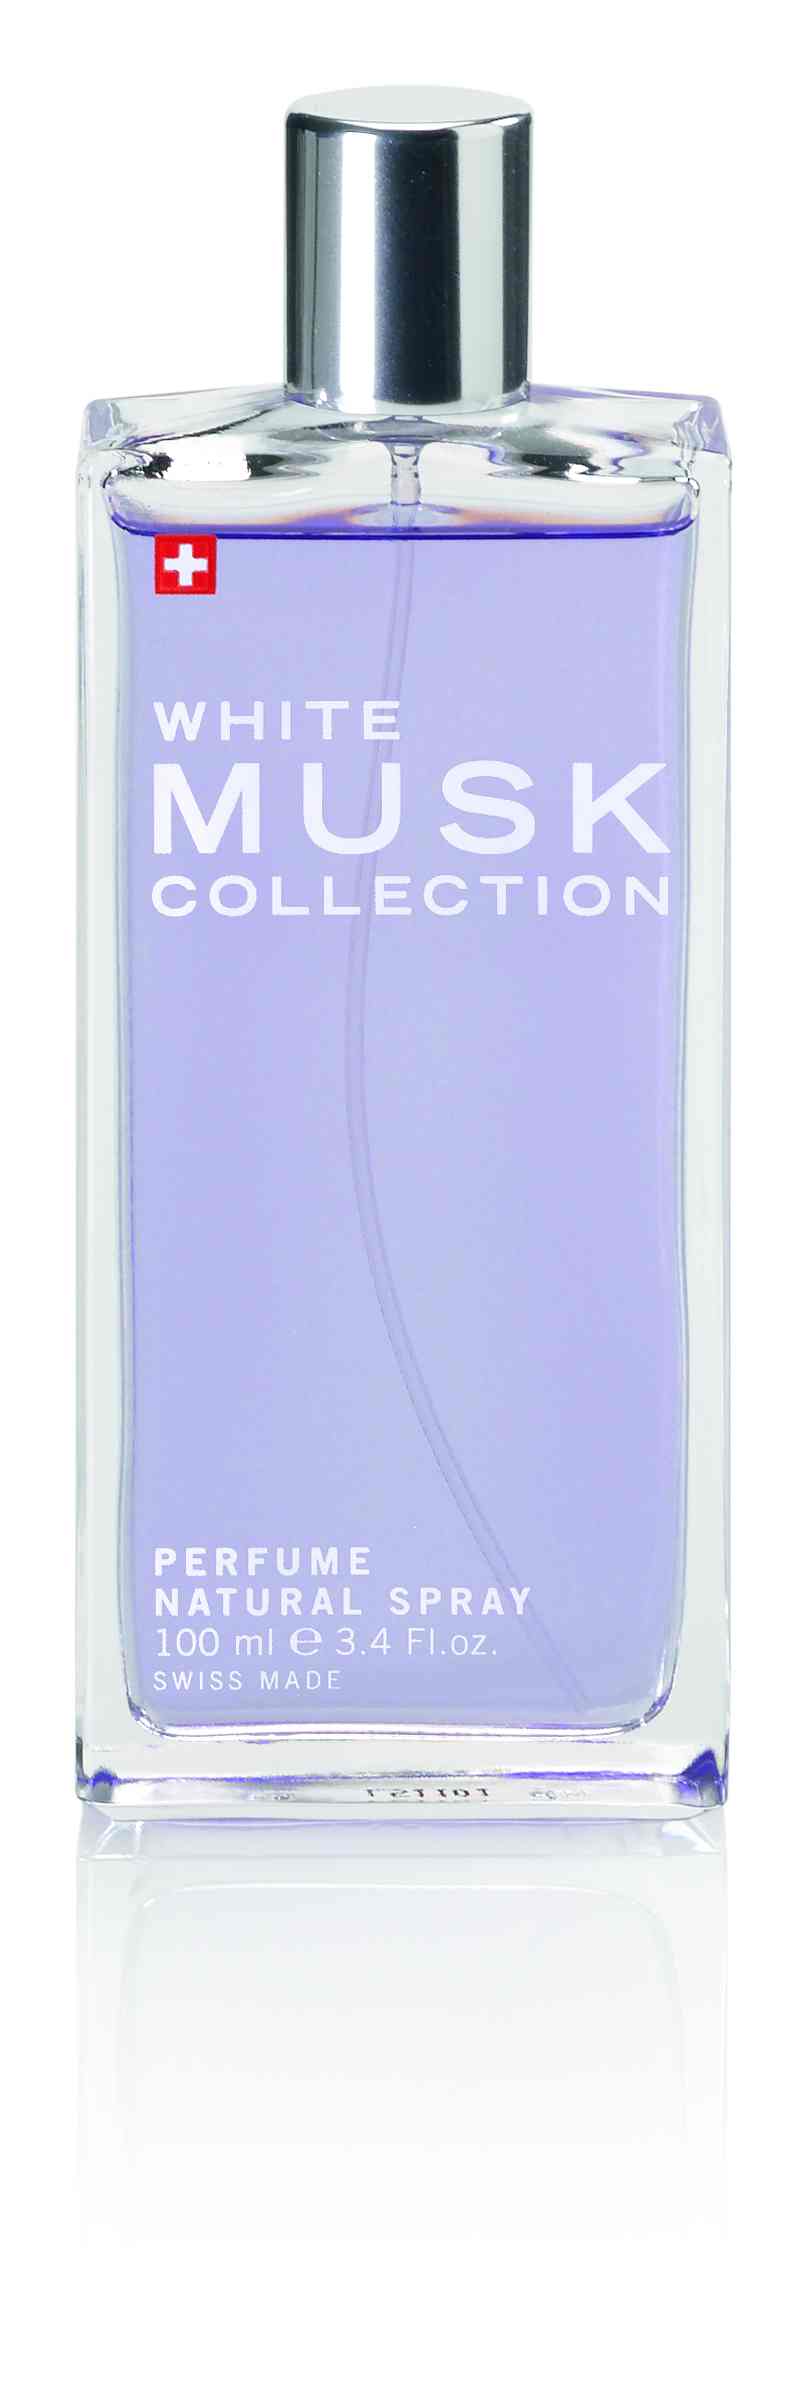 WHITE MUSK Collection perfume, image principale